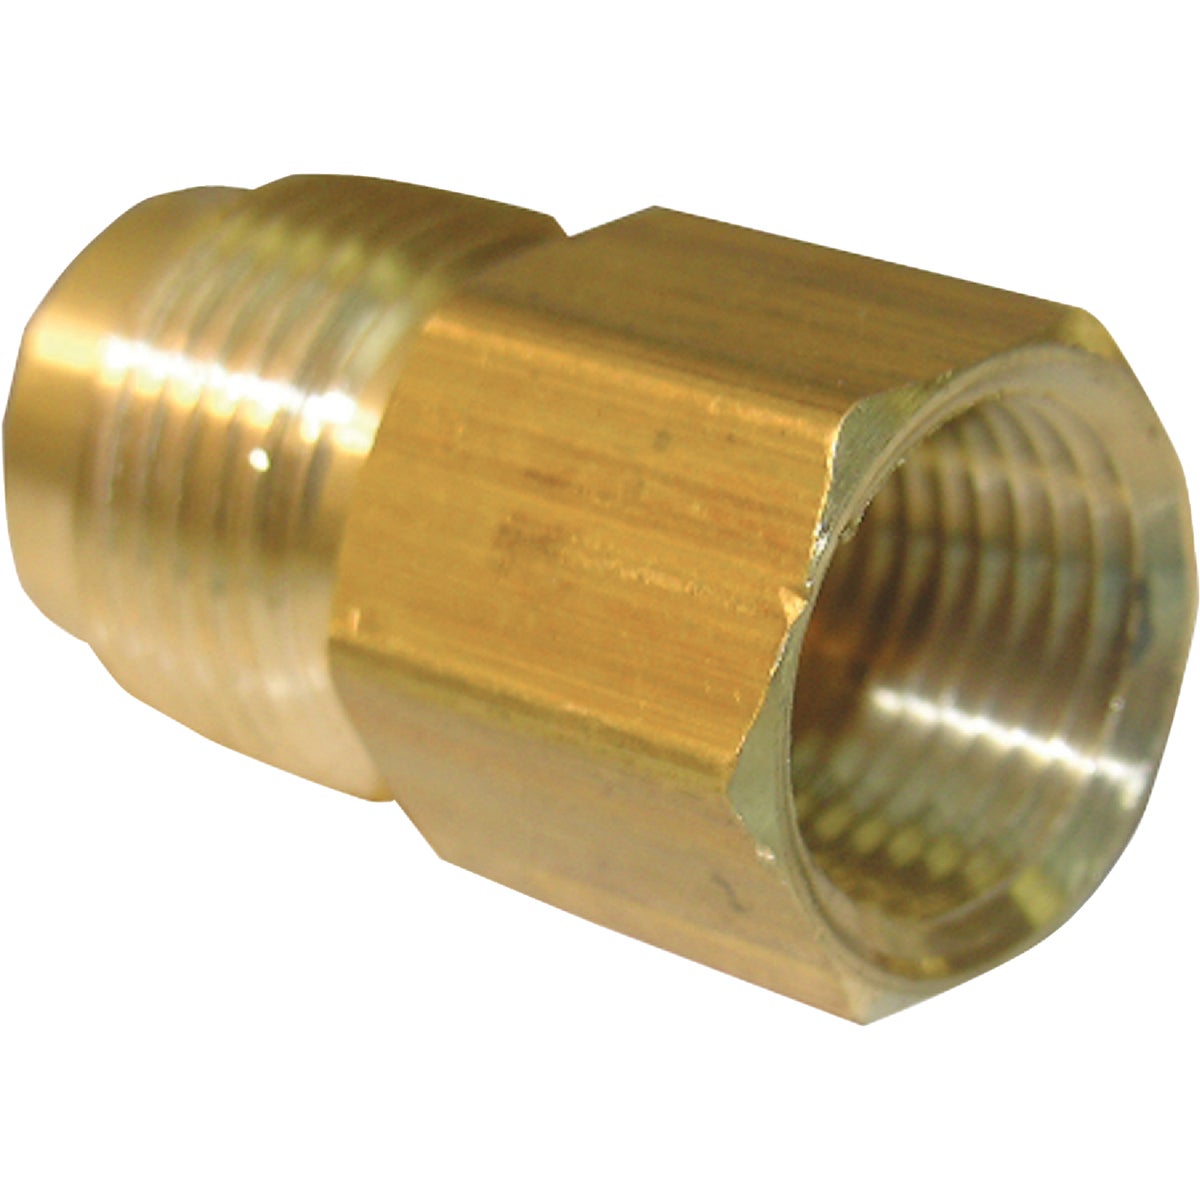 Lasco 1/2 In.M x 3/8 In. FPT Brass Flare Adapter